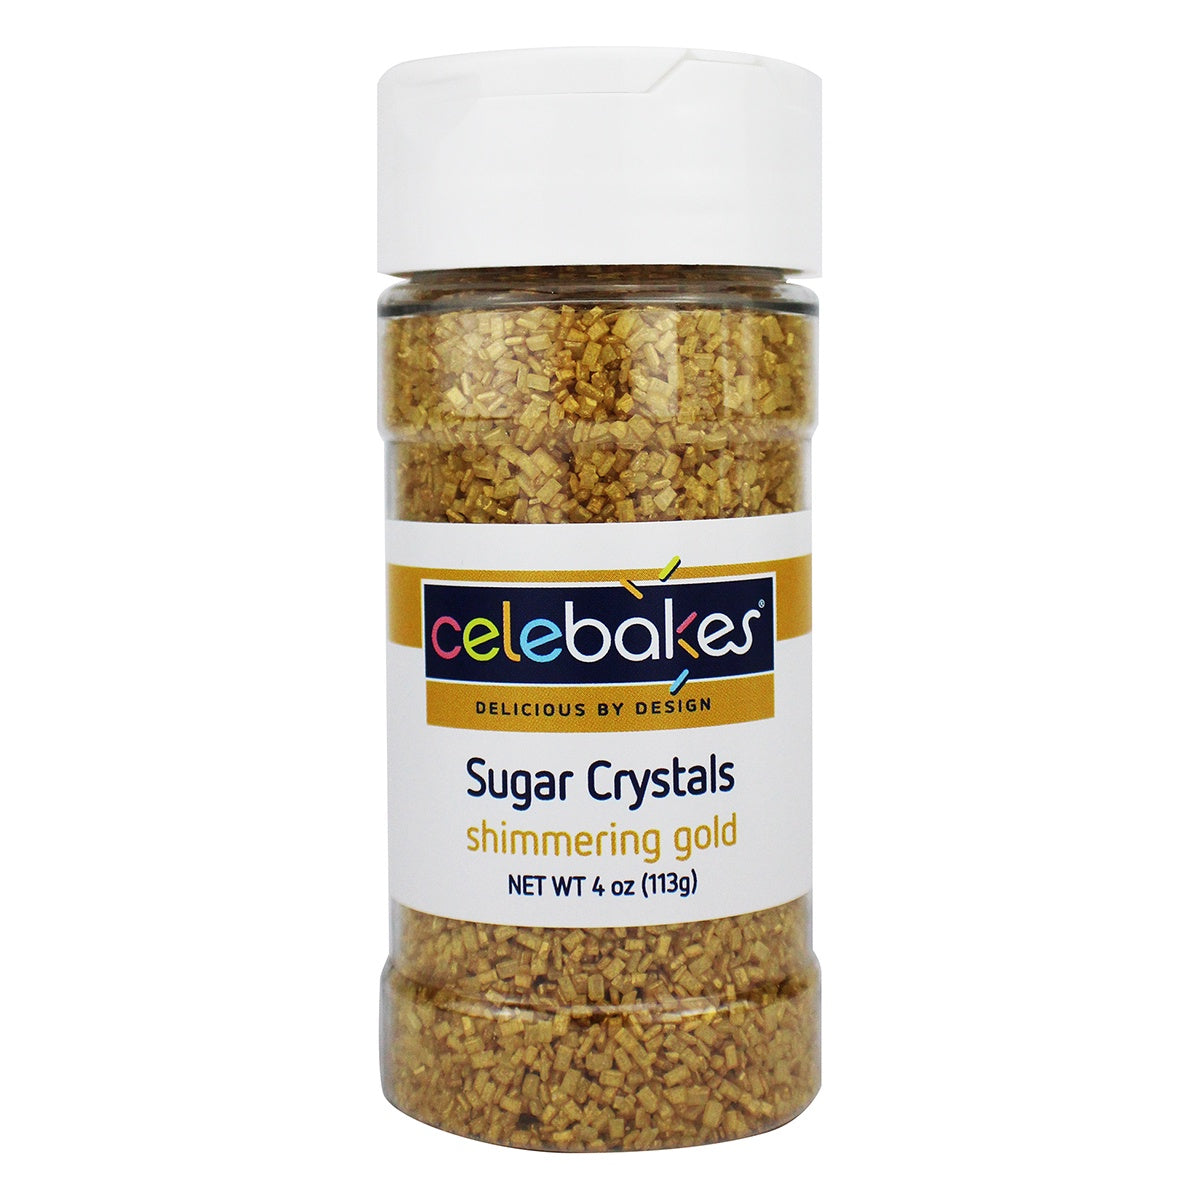 Celebakes Shimmering Gold Sugar Crystals